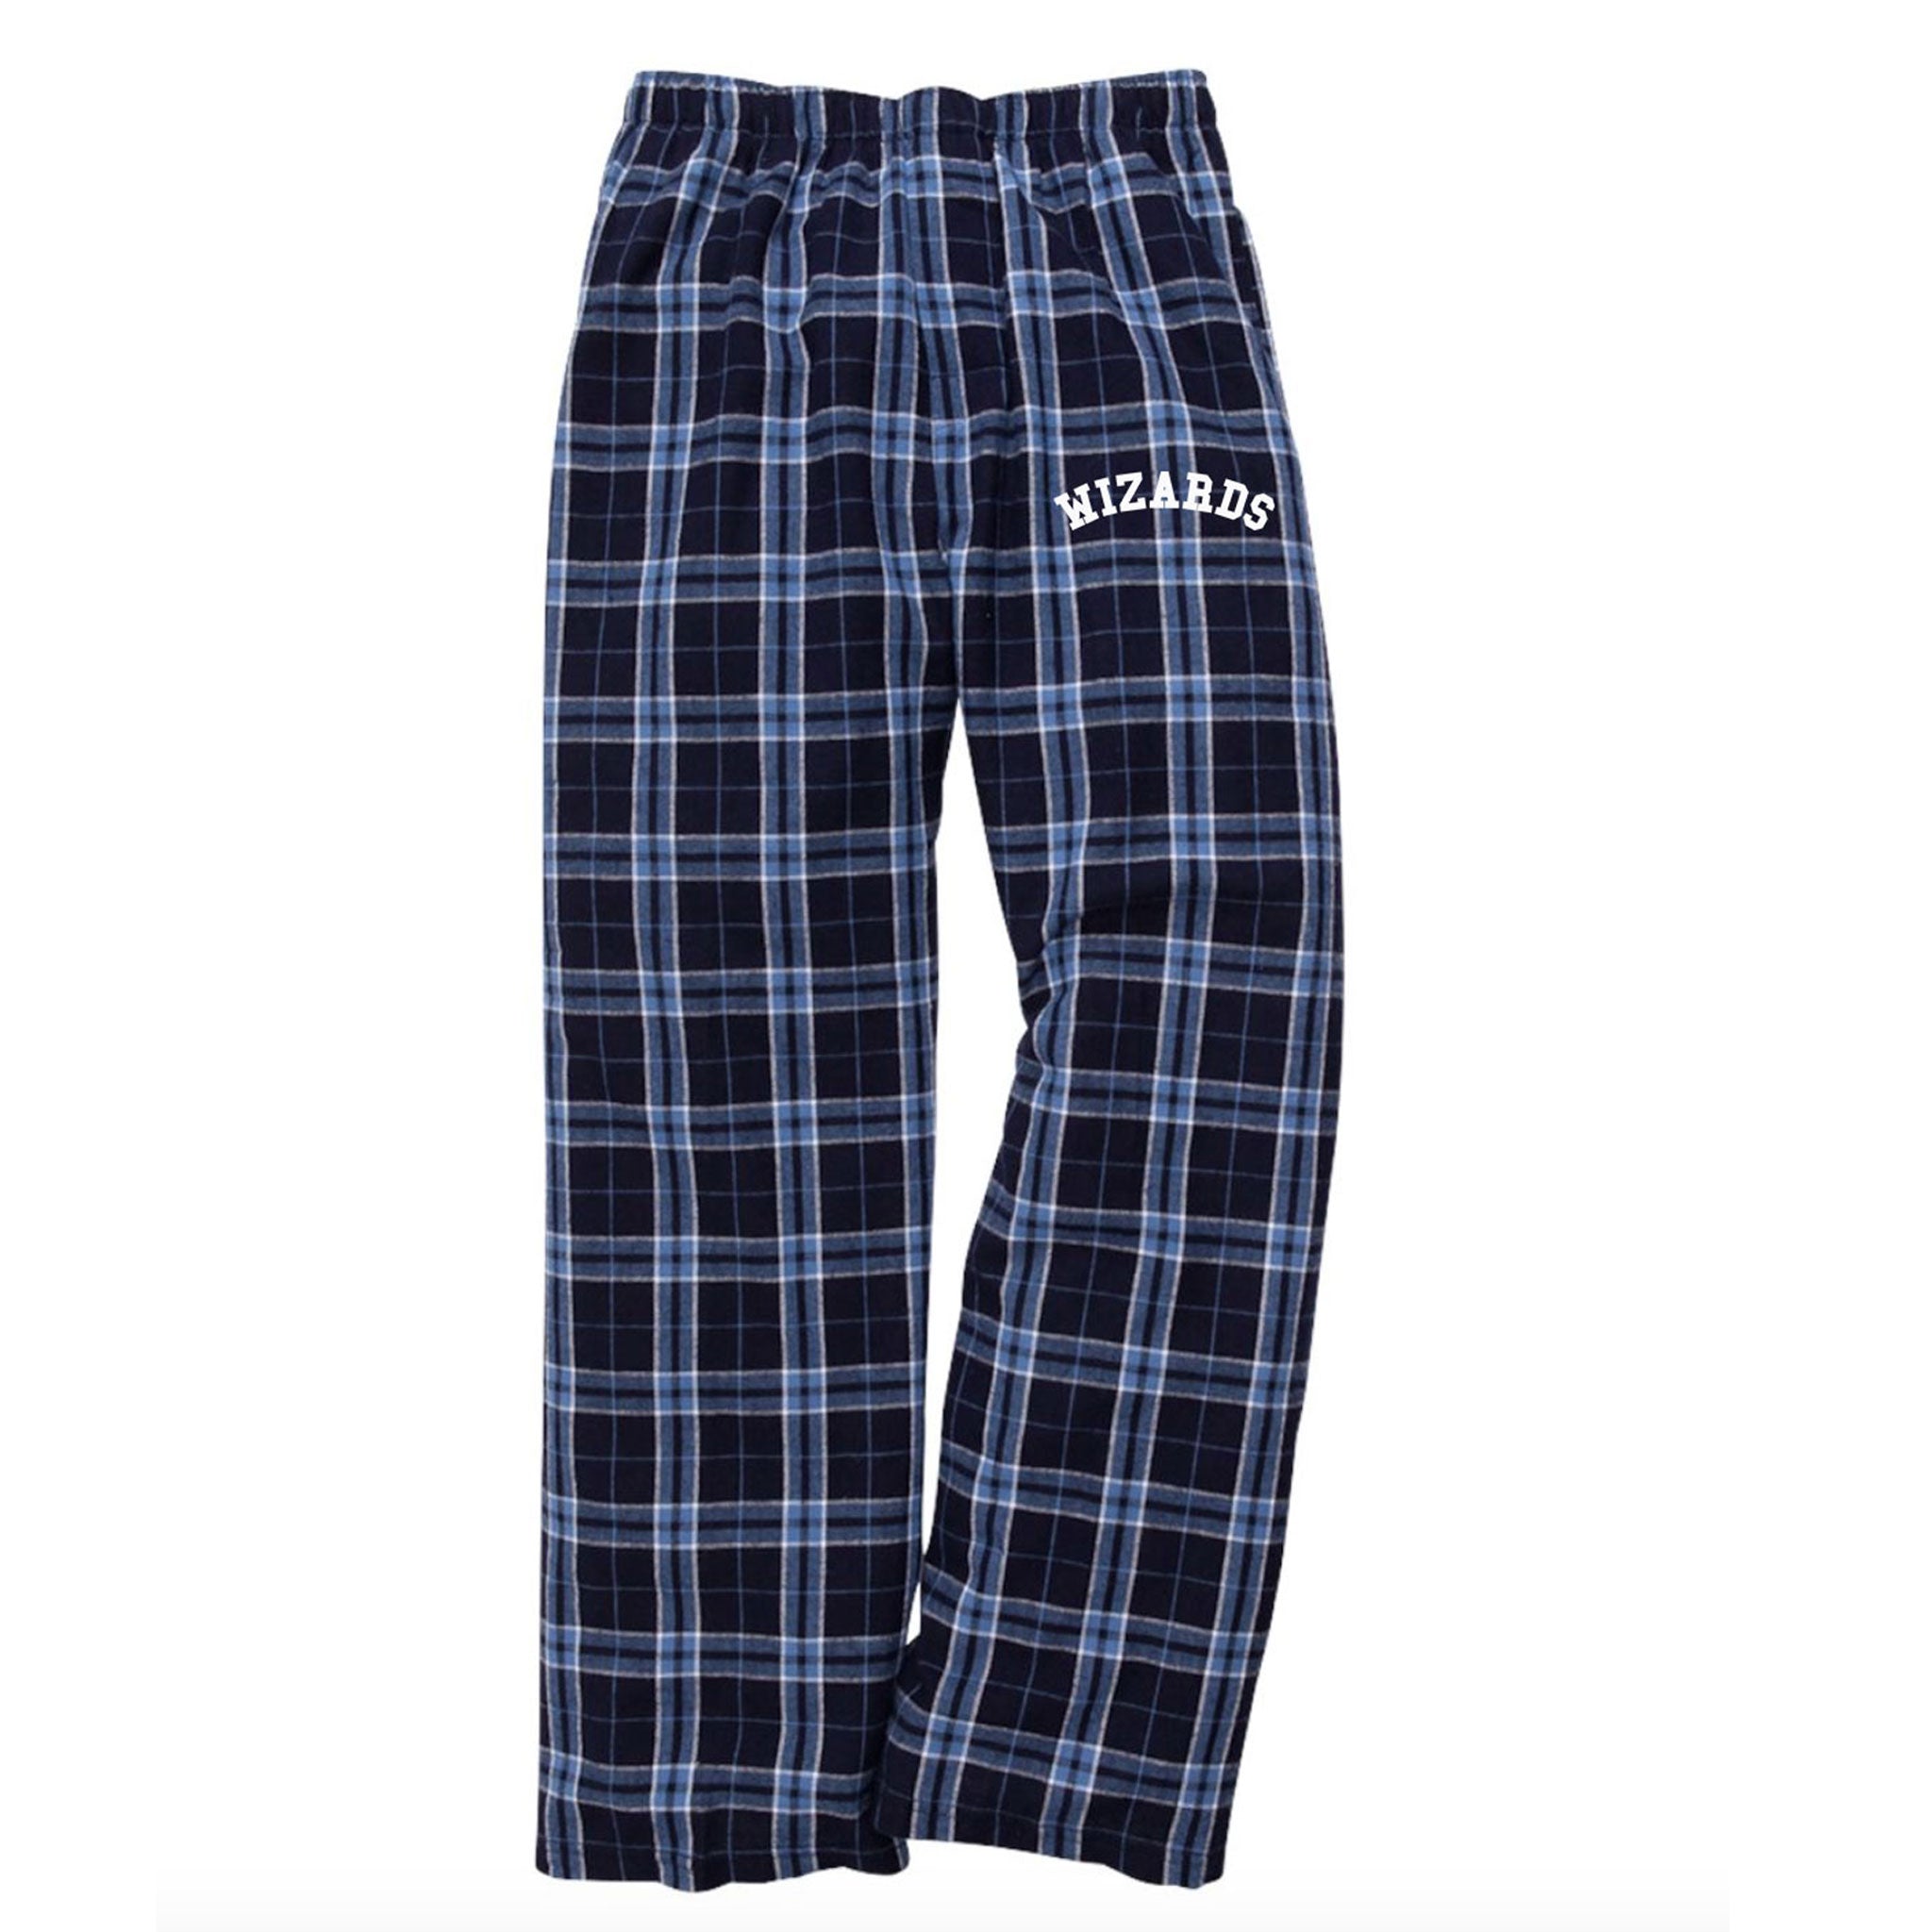 Washington Pajama Pants - Navy/Columbia Plaid